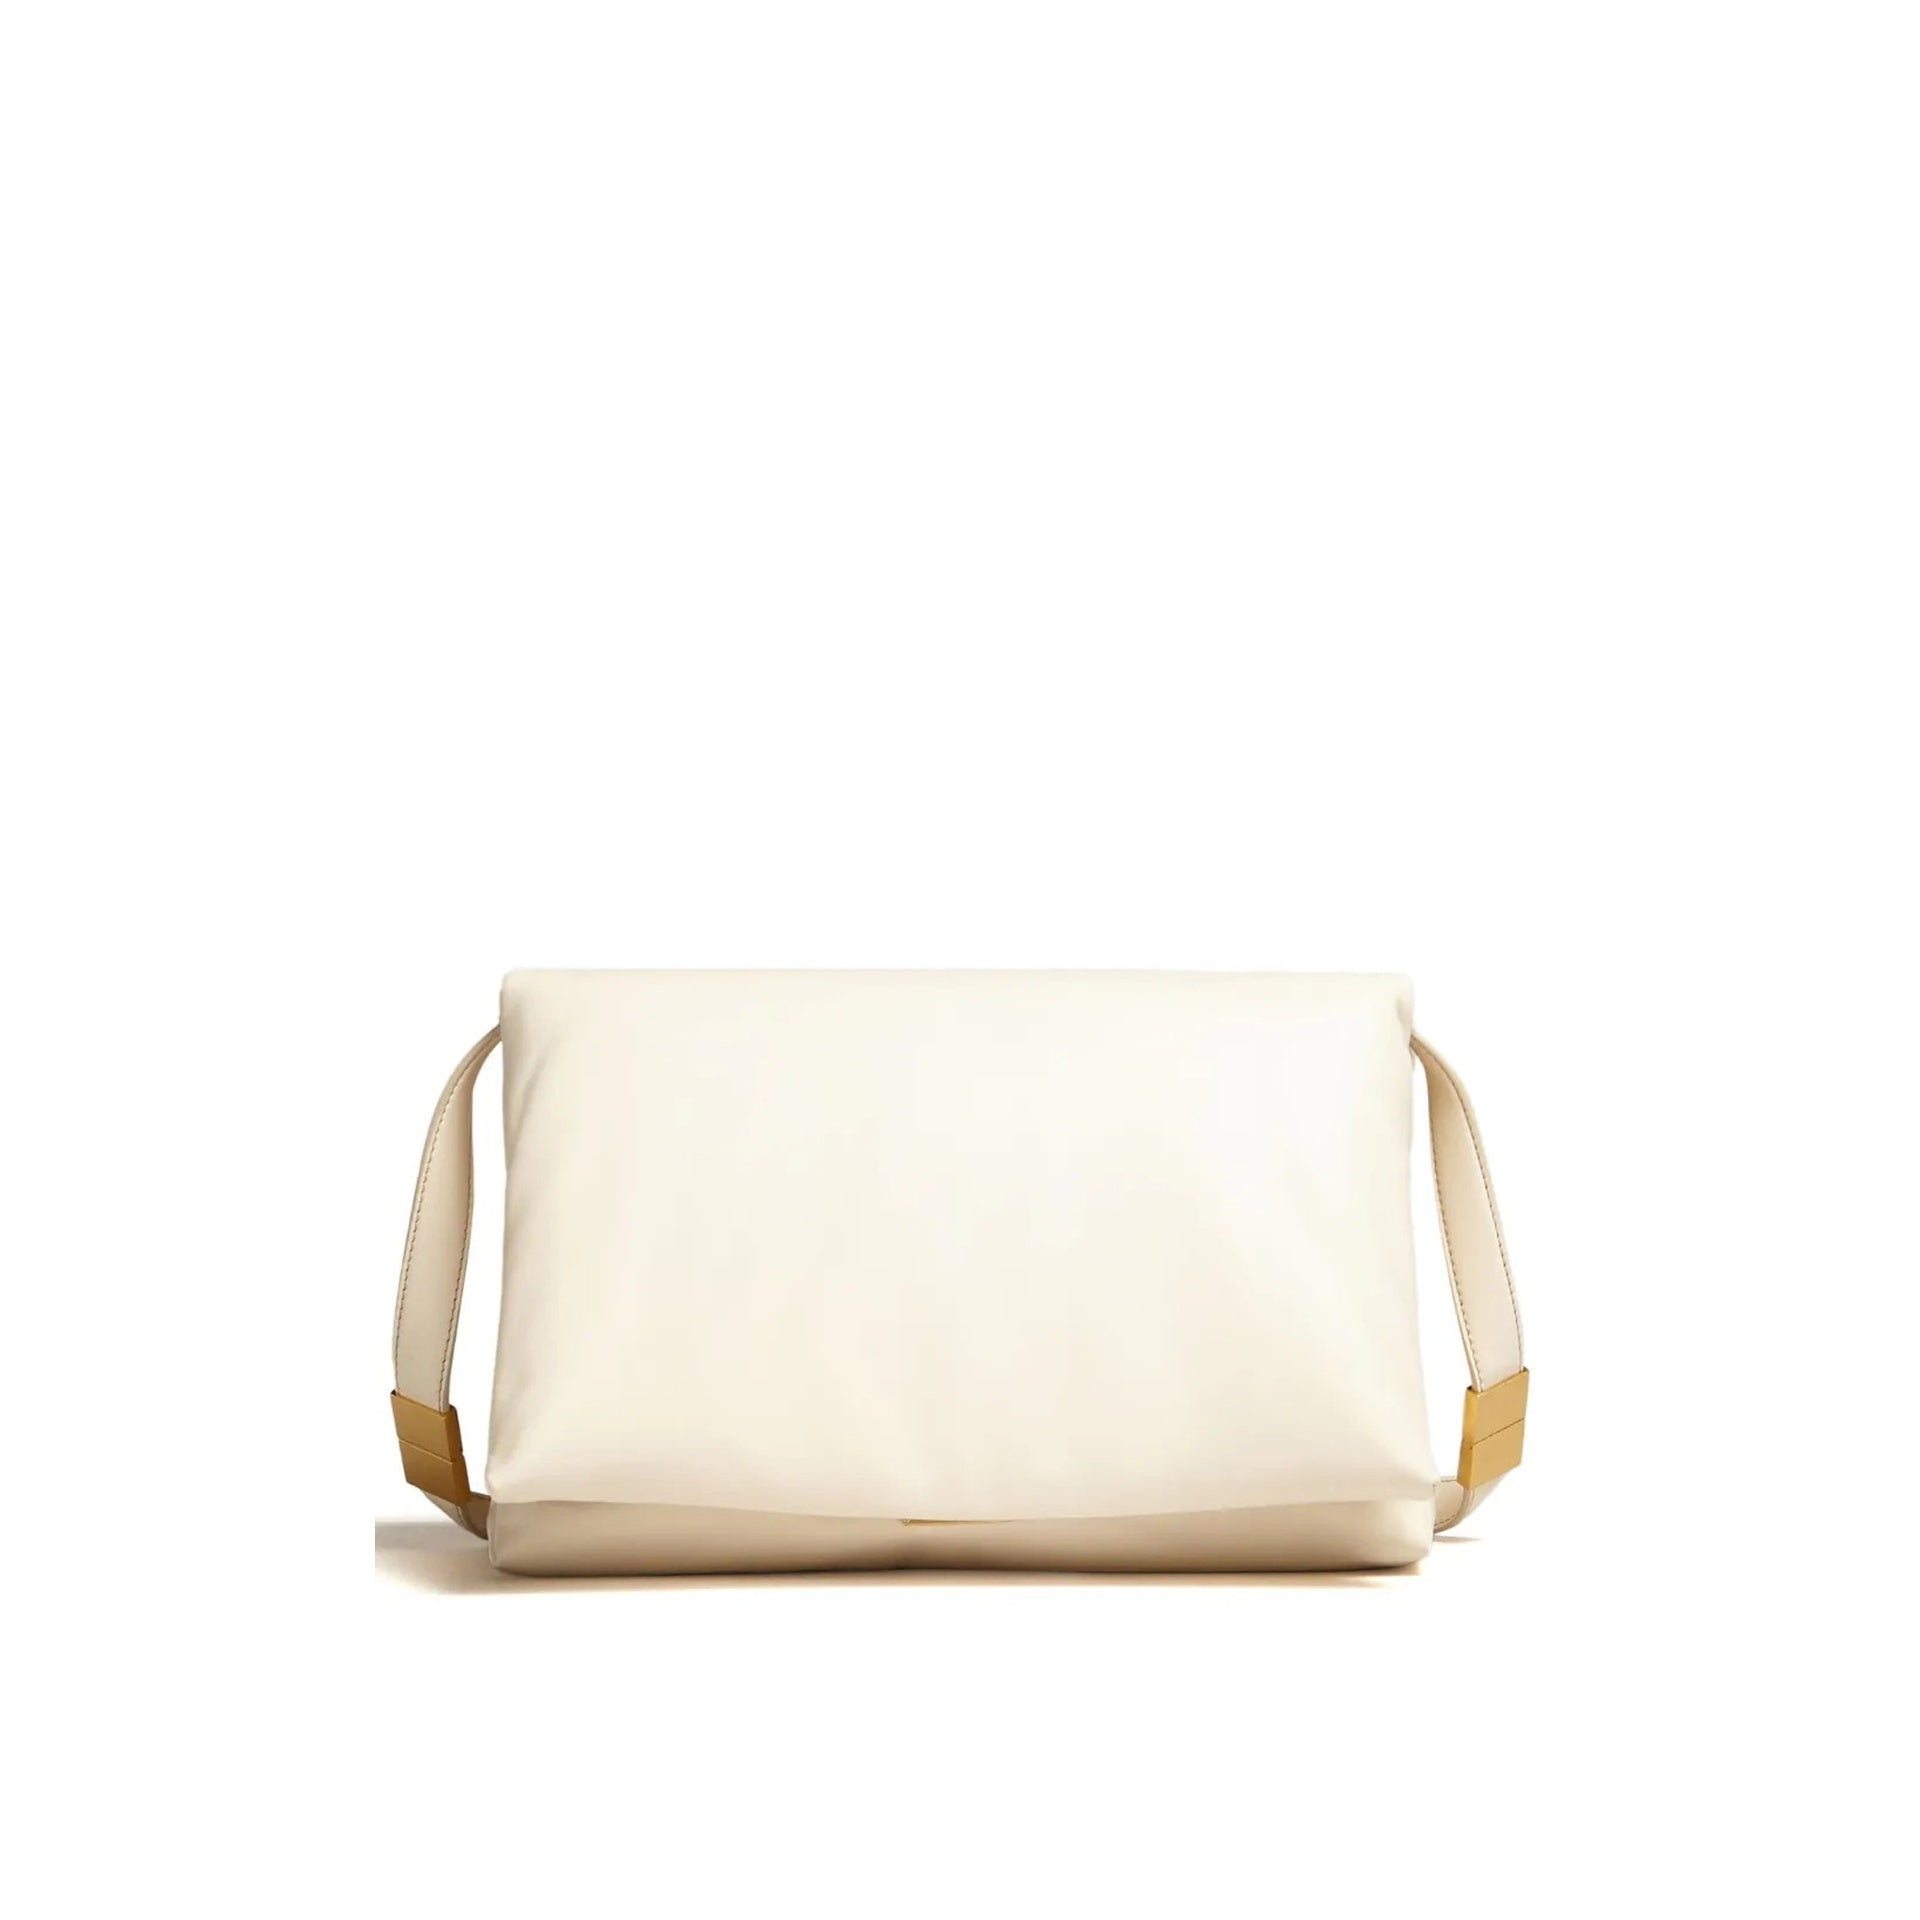 MARNI-OUTLET-SALE-Marni-Padded-Leather-Shoulder-Bag-Taschen-CREAM-UNI-ARCHIVE-COLLECTION.jpg